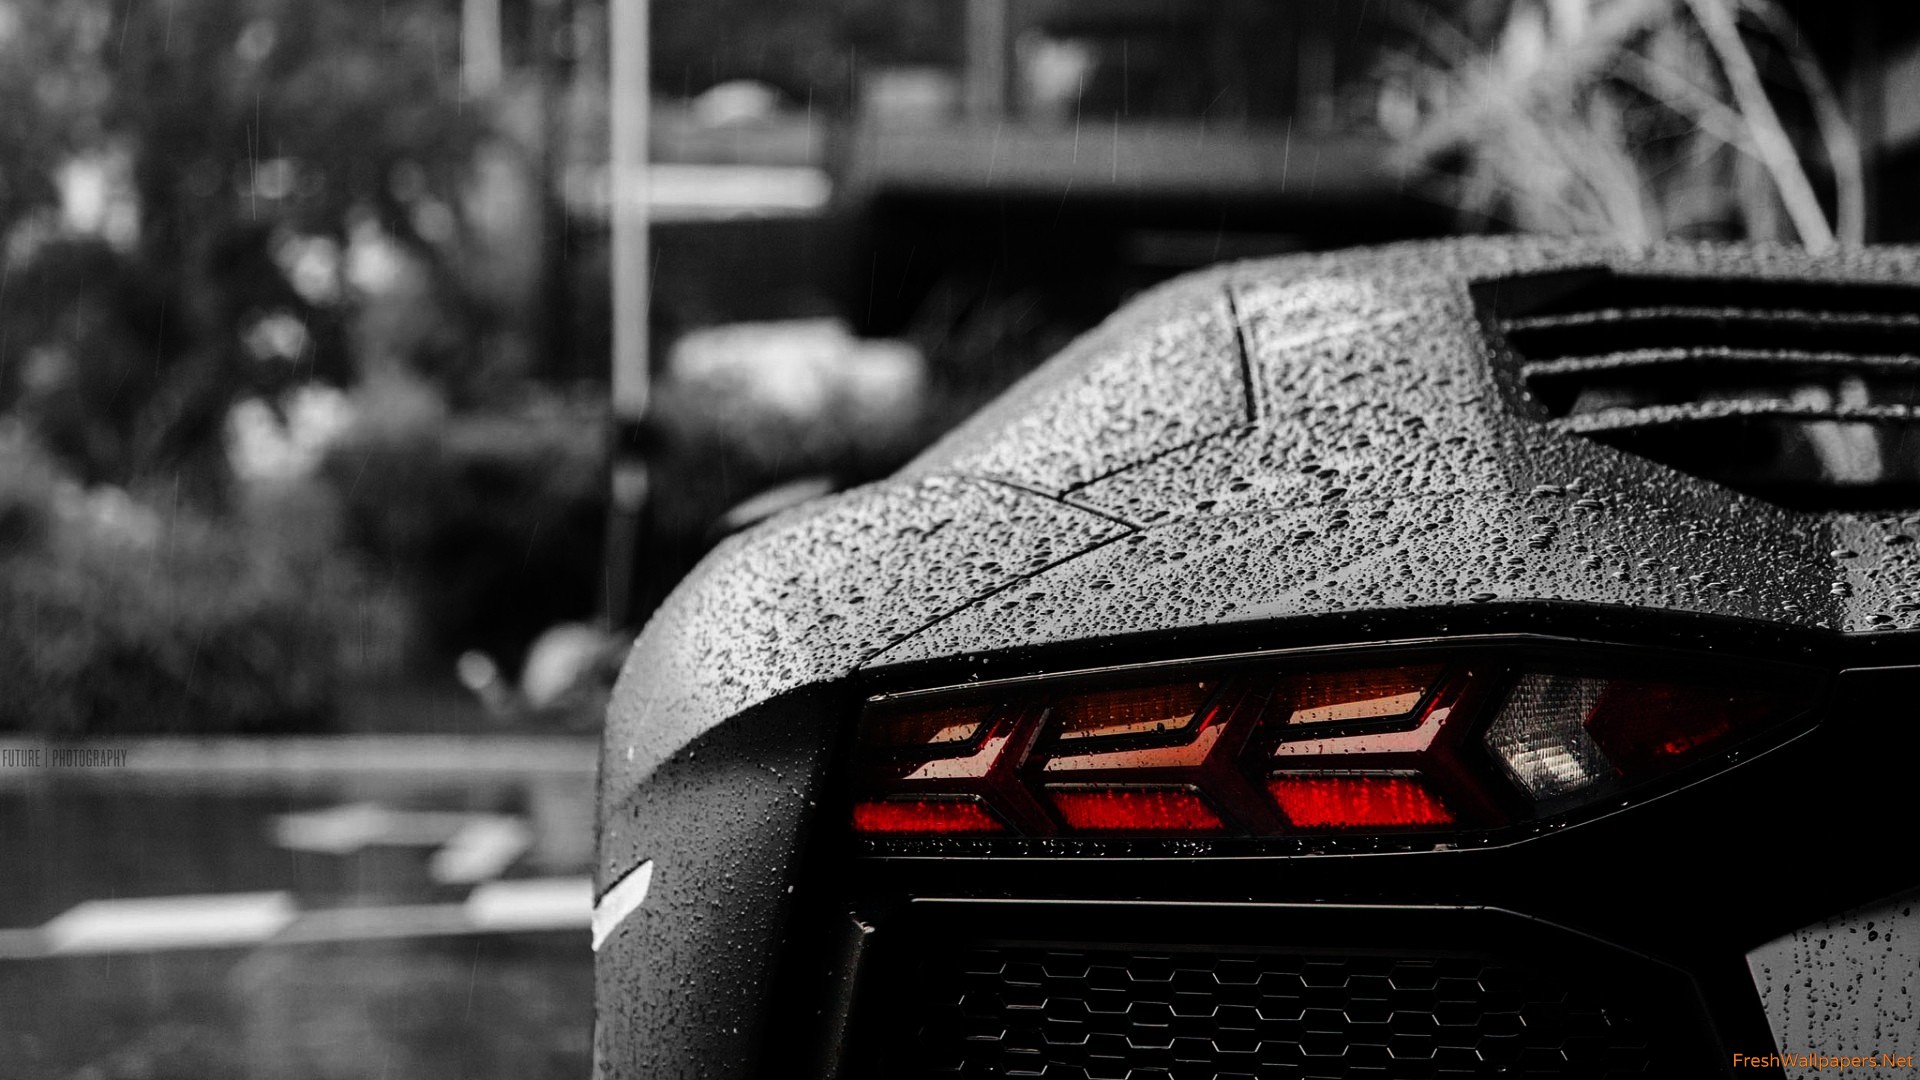 Laden Sie das Lamborghini, Lamborghini Aventador, Fahrzeuge-Bild kostenlos auf Ihren PC-Desktop herunter